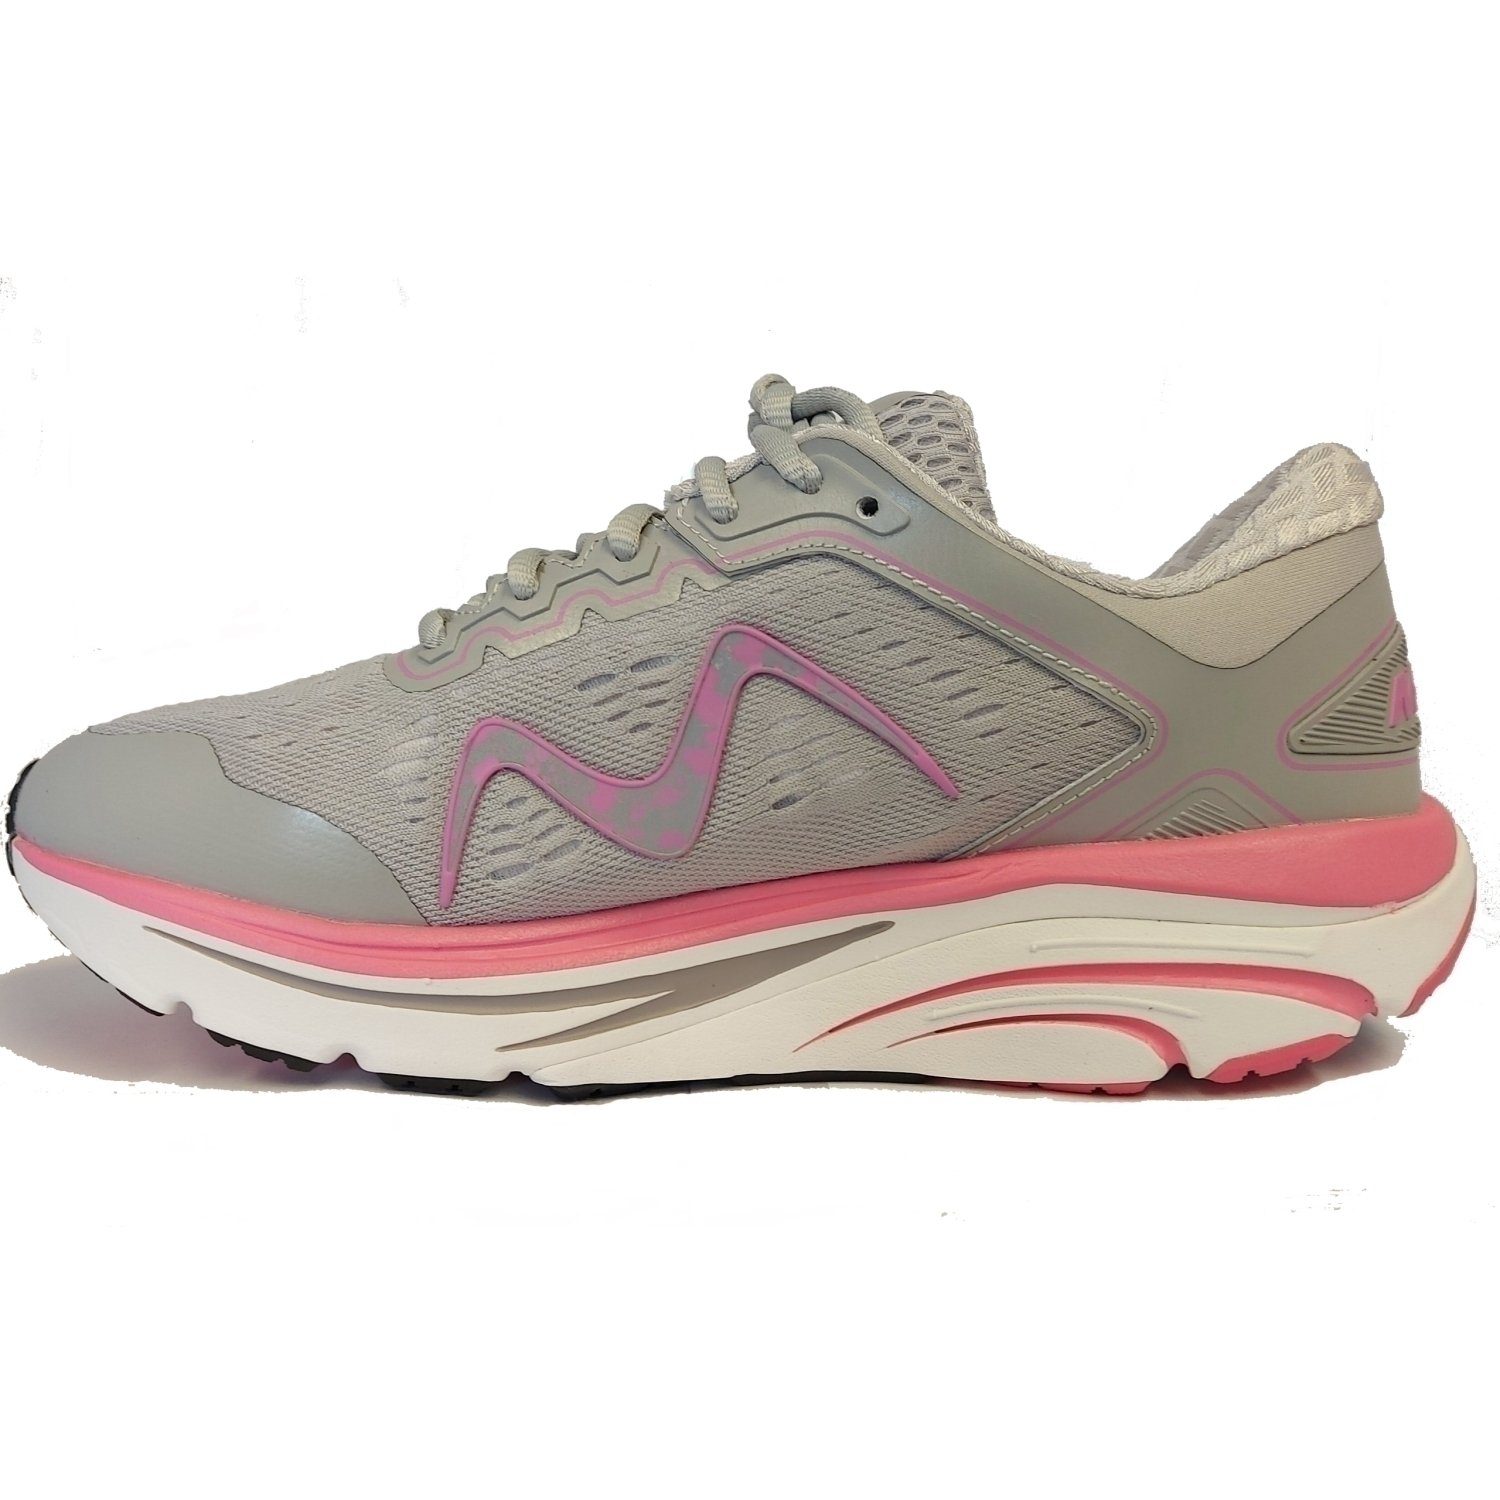 Sportschuhe UP GTC-2000 MBT grau / pink Sneaker W rosa LACE grey Damen